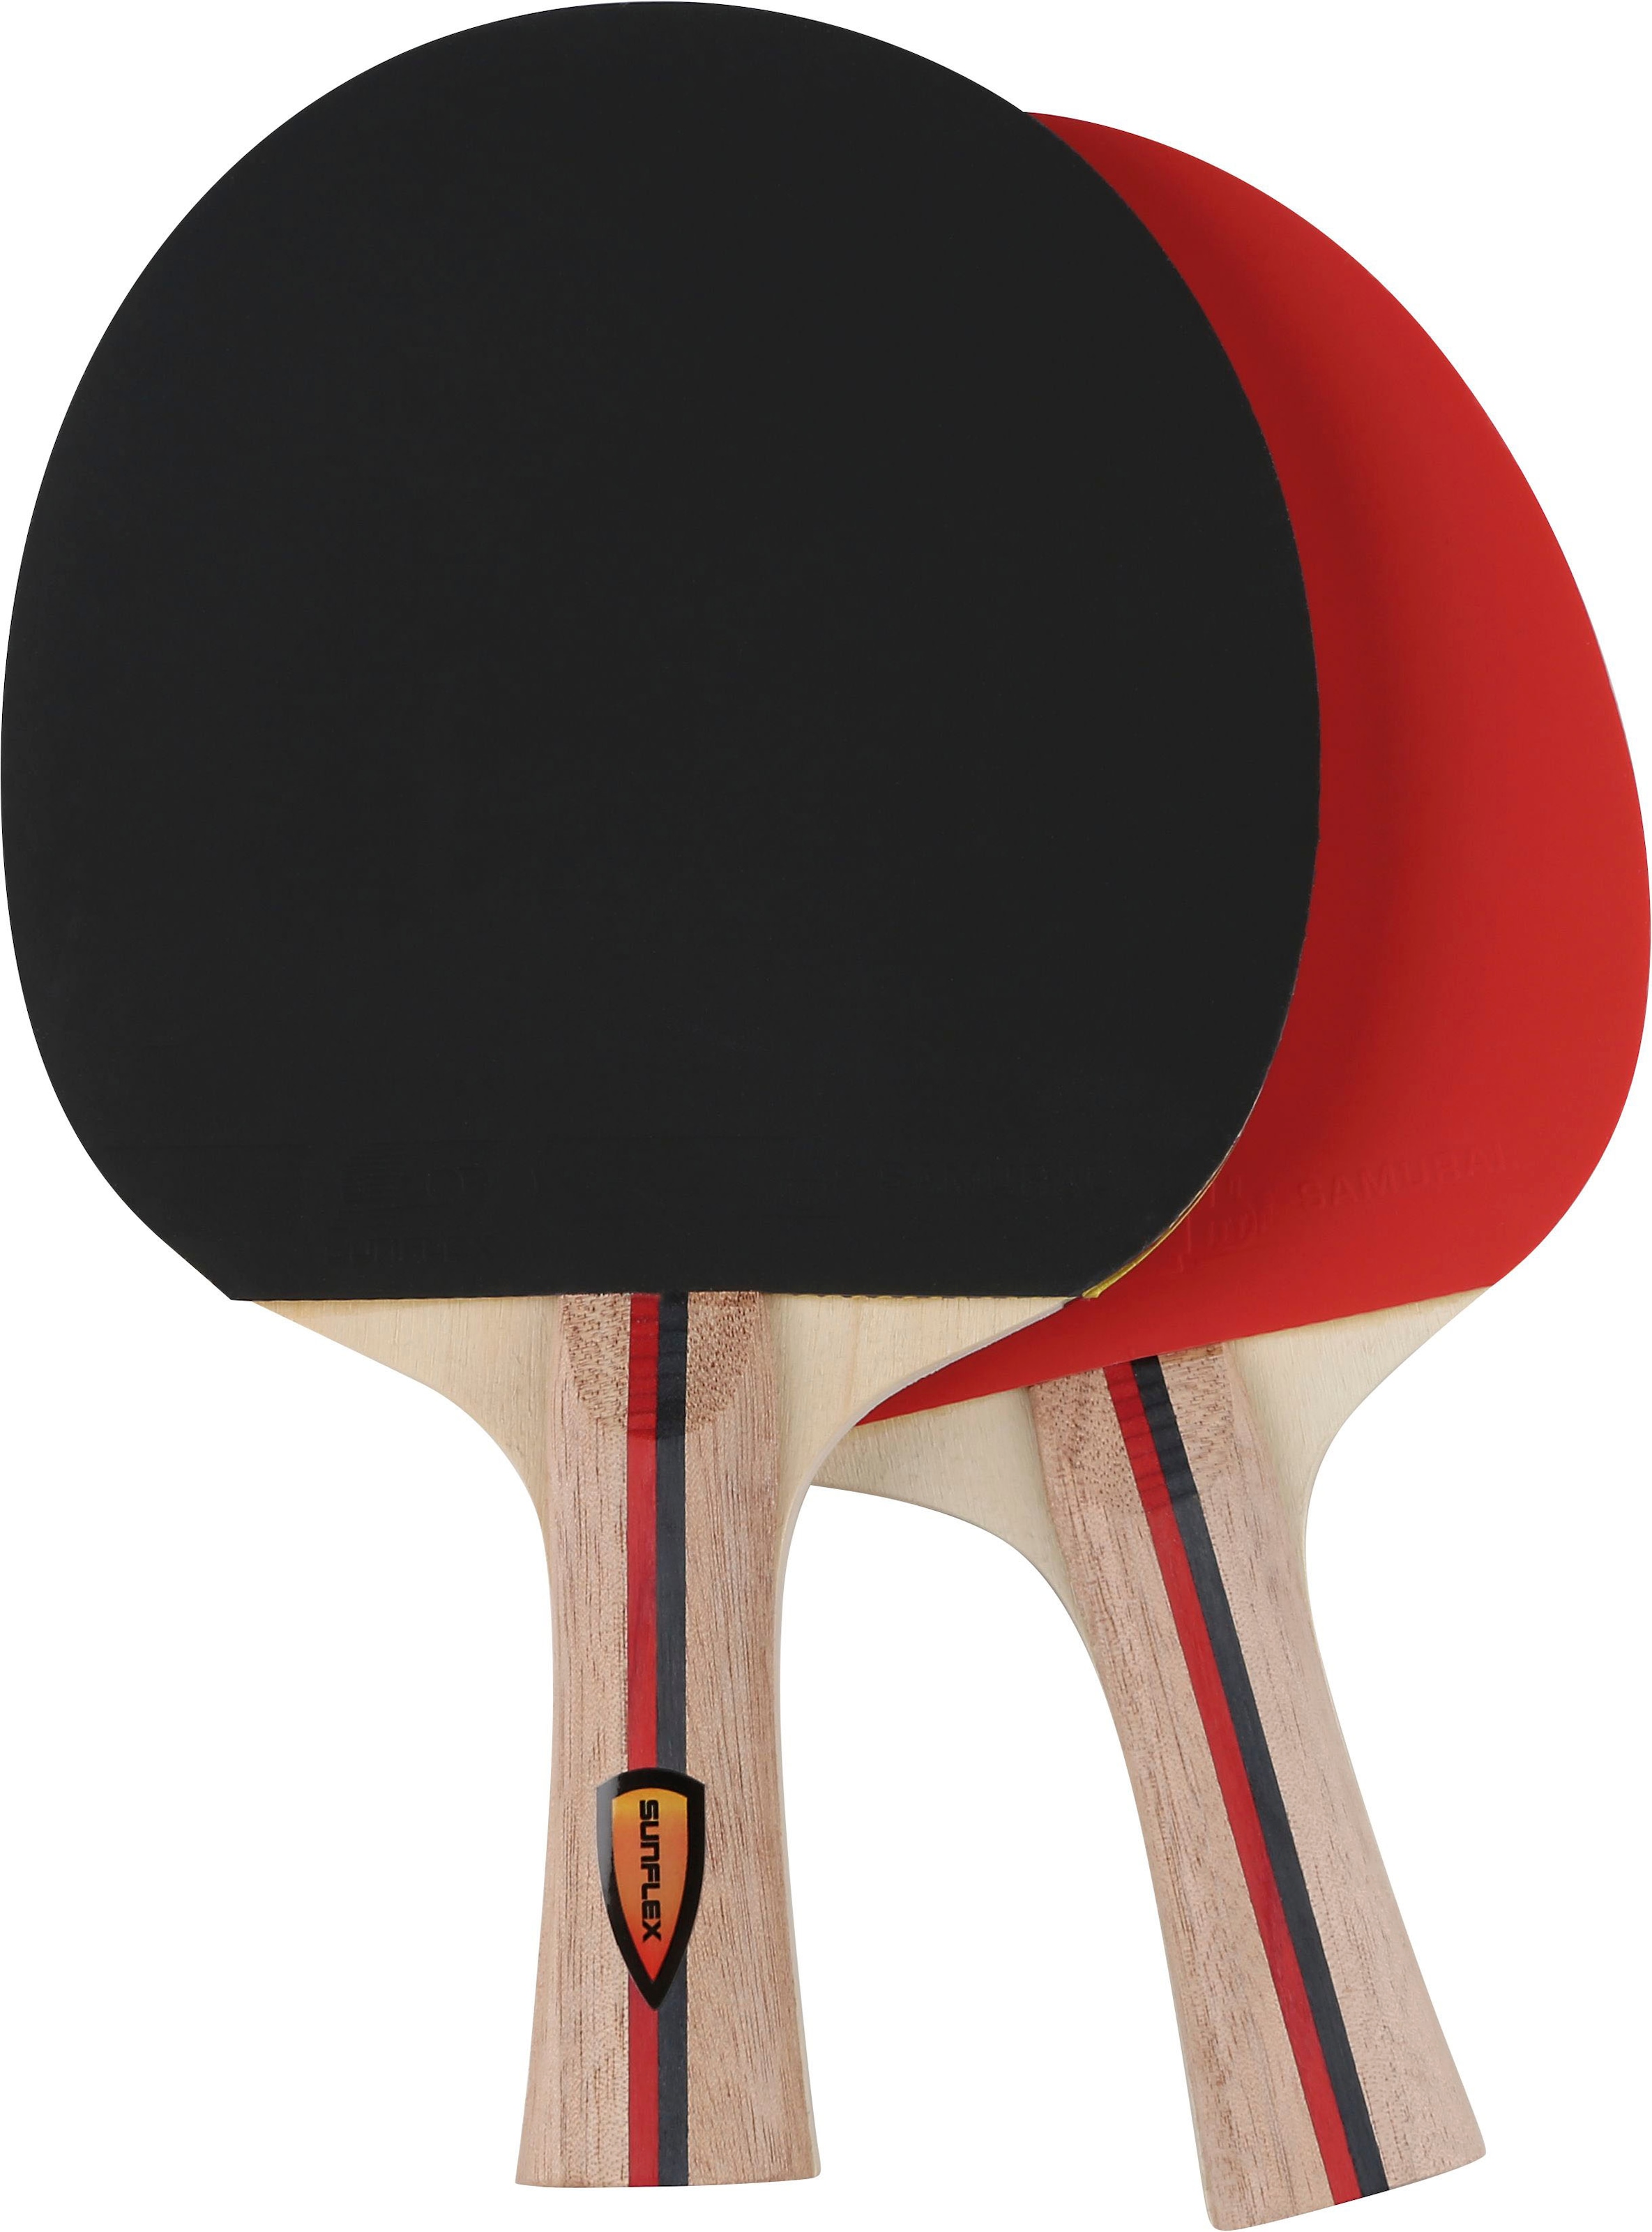 Sunflex Tischtennisschläger »Tischtennis Set Contest, Bälle Bat Racket«